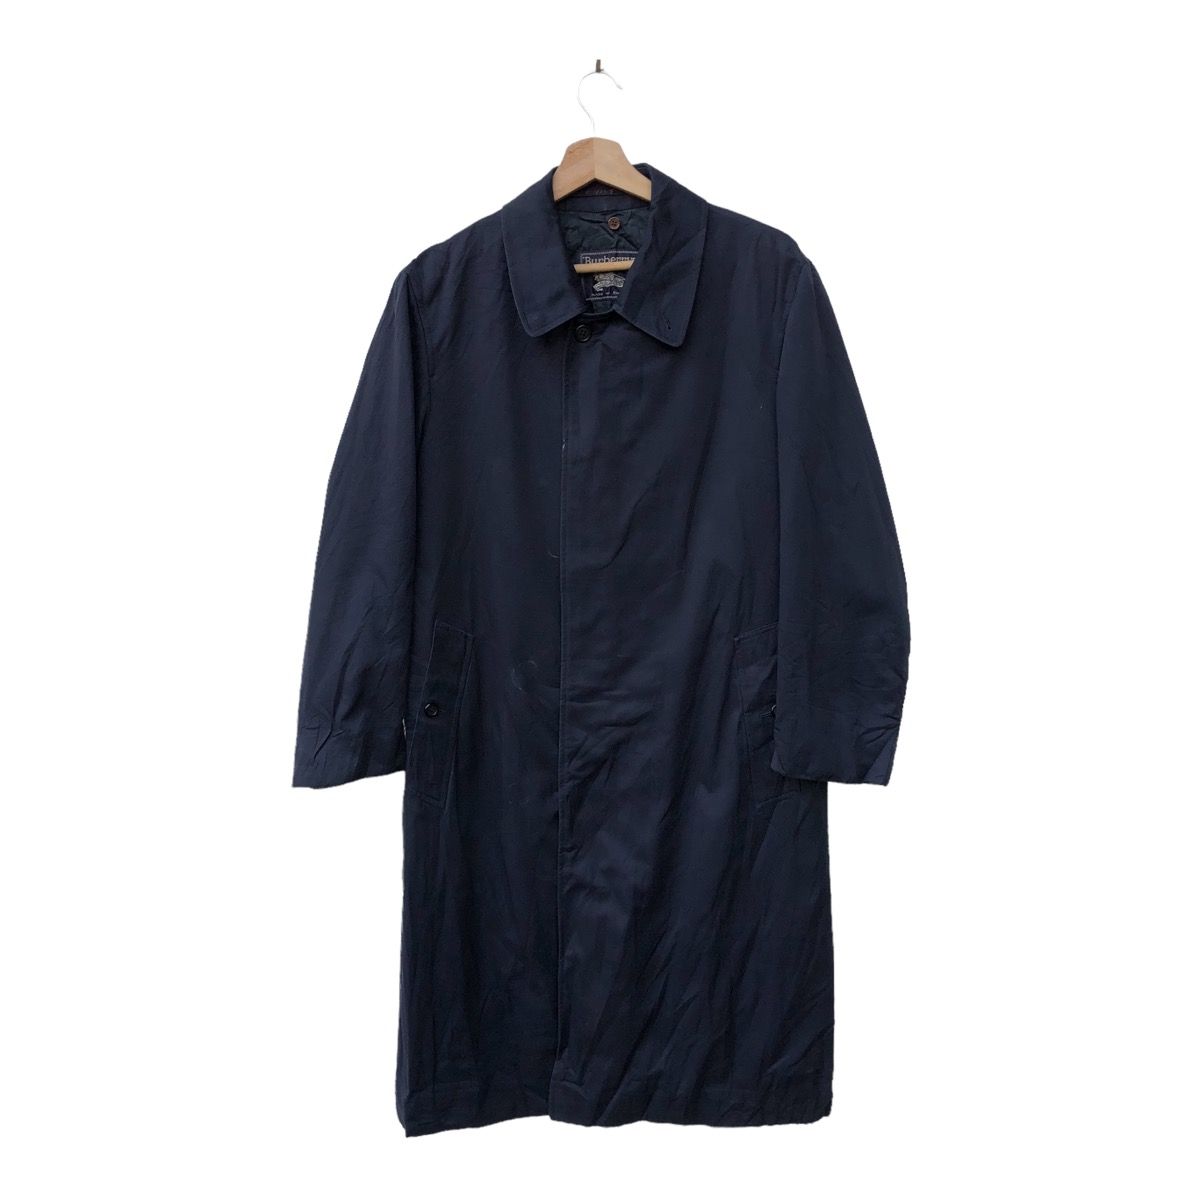 🤝Vintage Burberry England Trench Coat Nova Check Jacket - 1